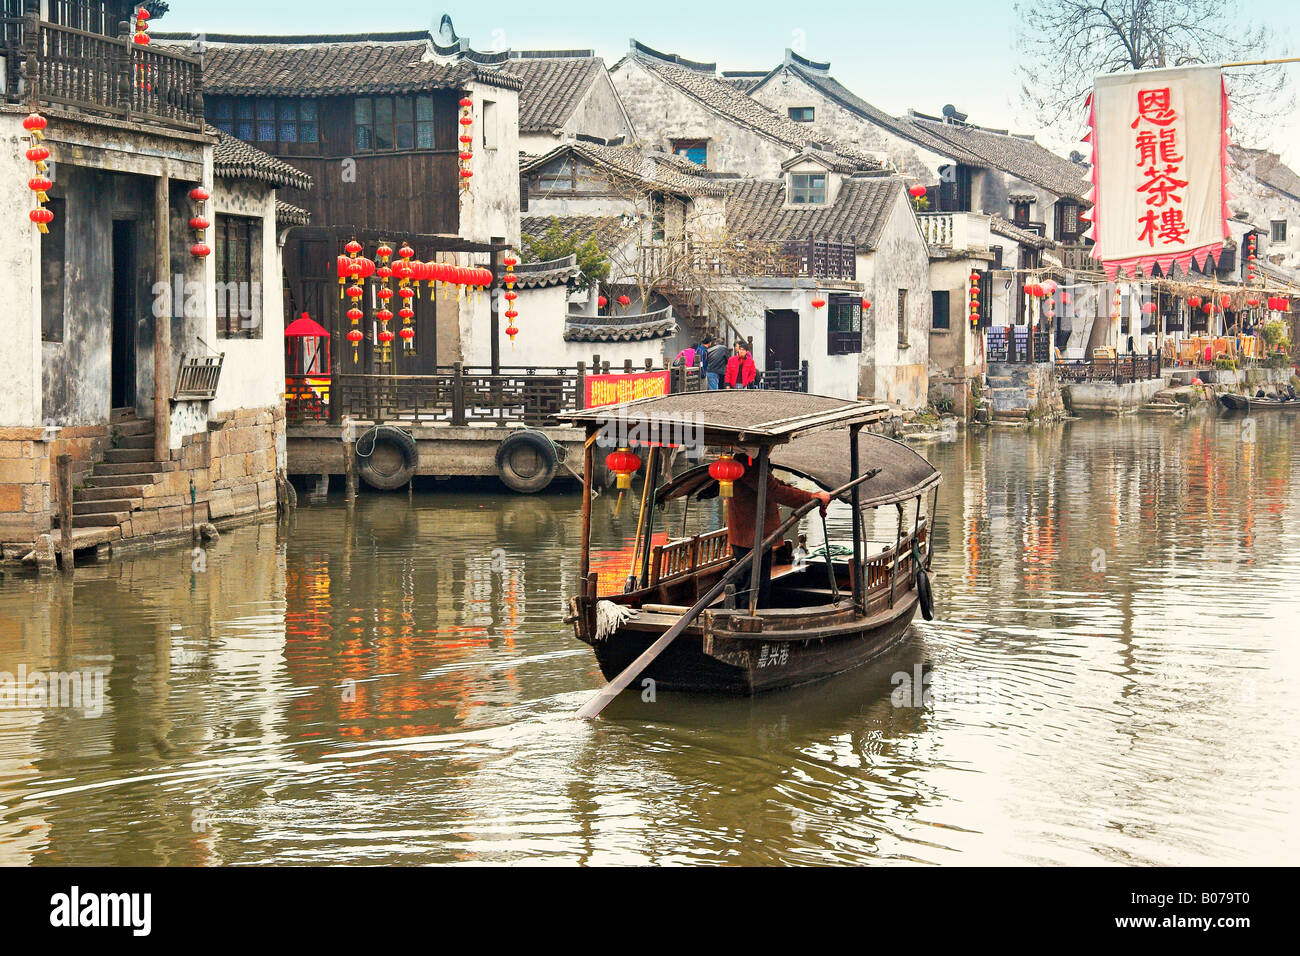 Boat On The Canal At Xitang China Stock Photo